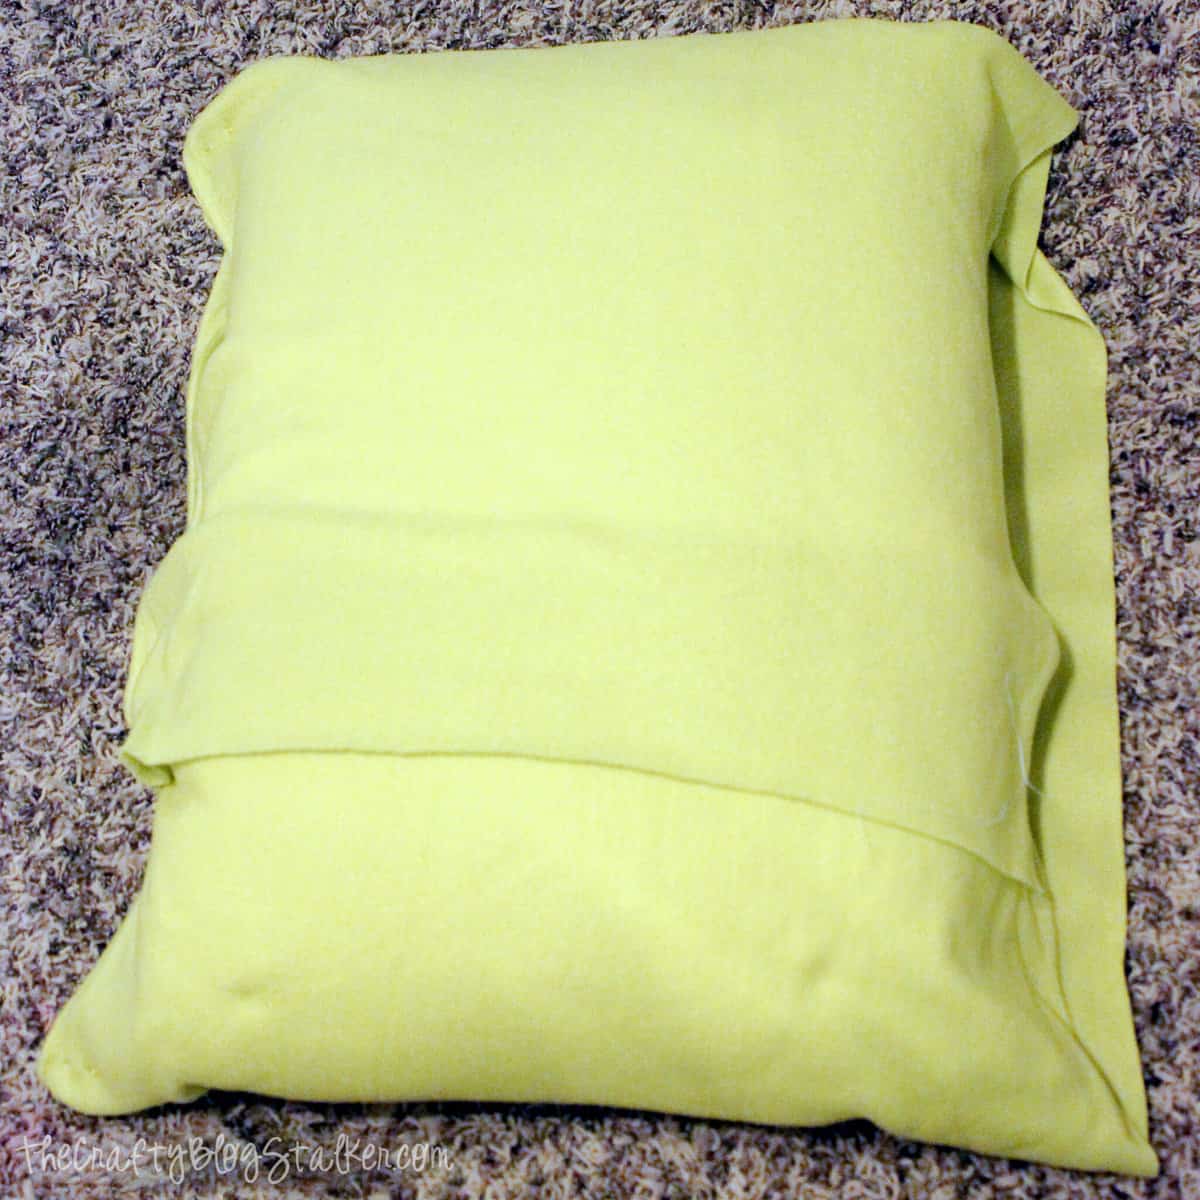 wrapping fleece fabric around a pillow 